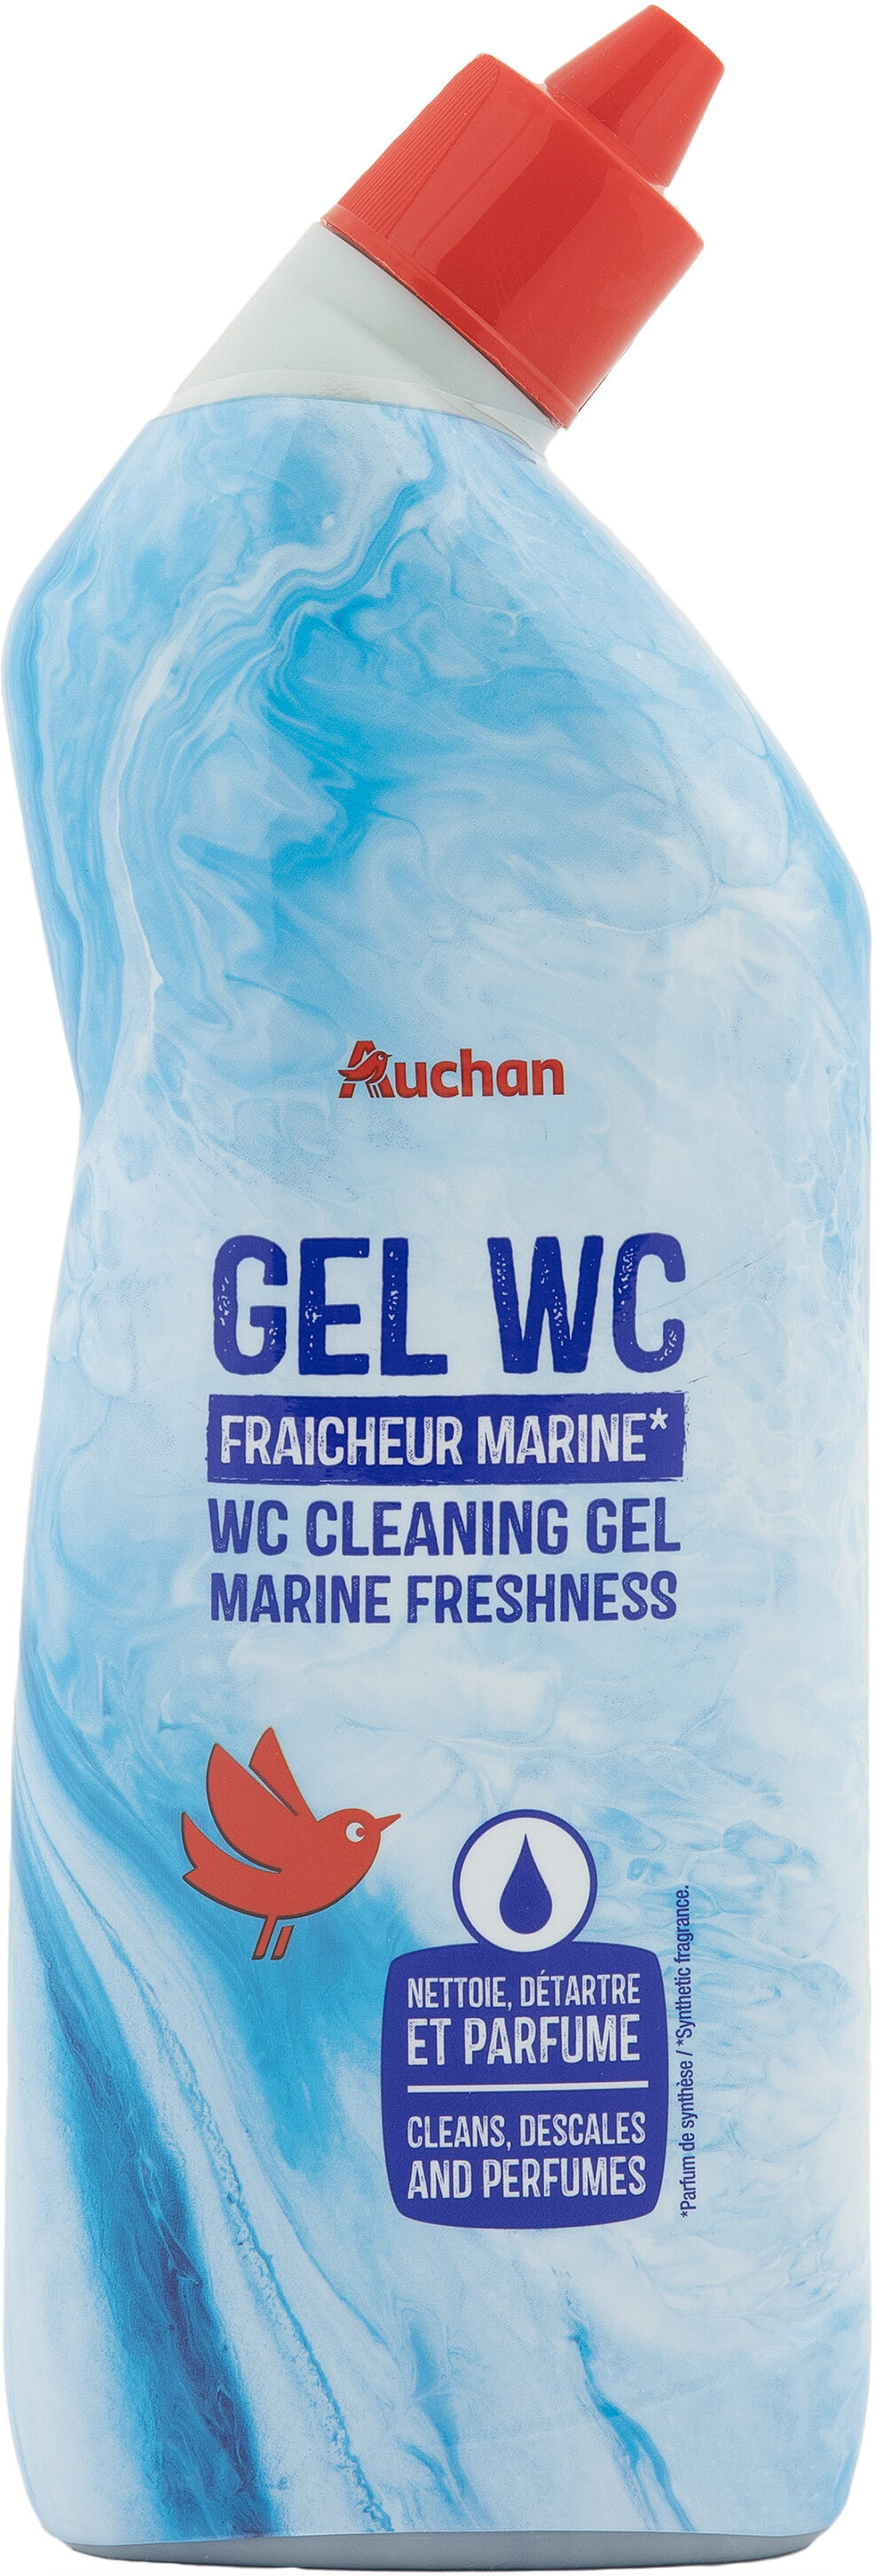 Auchan gel nettoyant wc fraicheur marine 750ml - Produit - fr